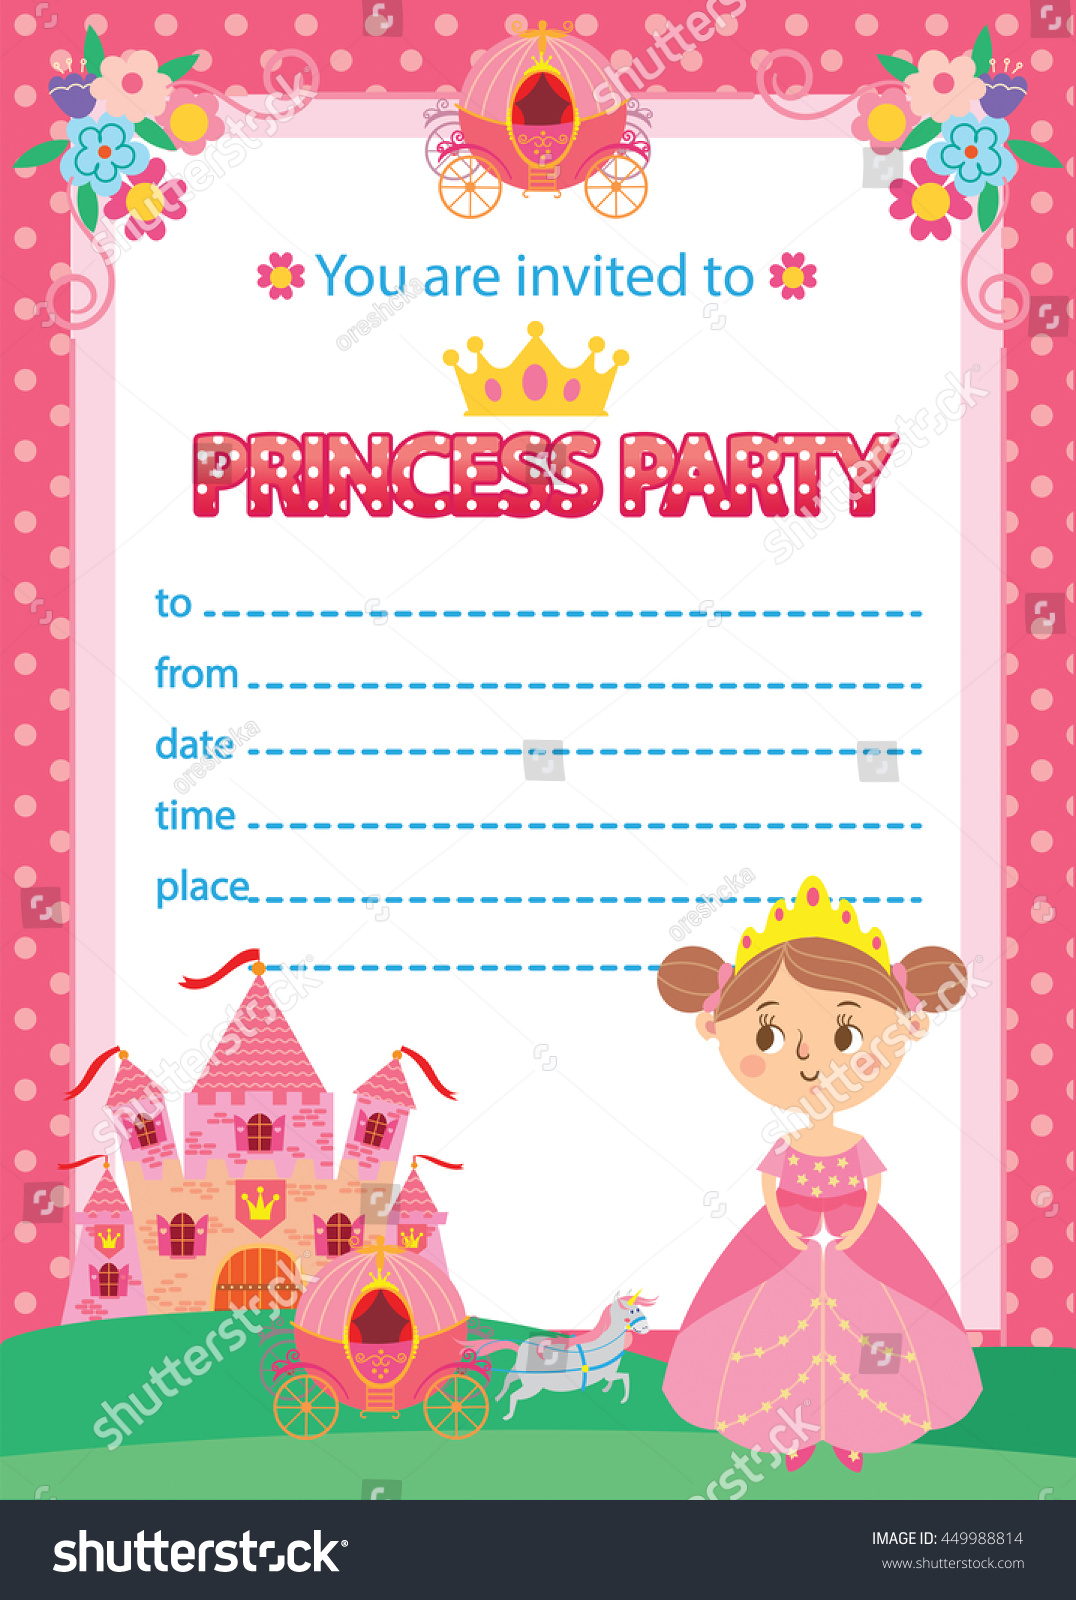 Princess Birthday Invitation Template from image.shutterstock.com